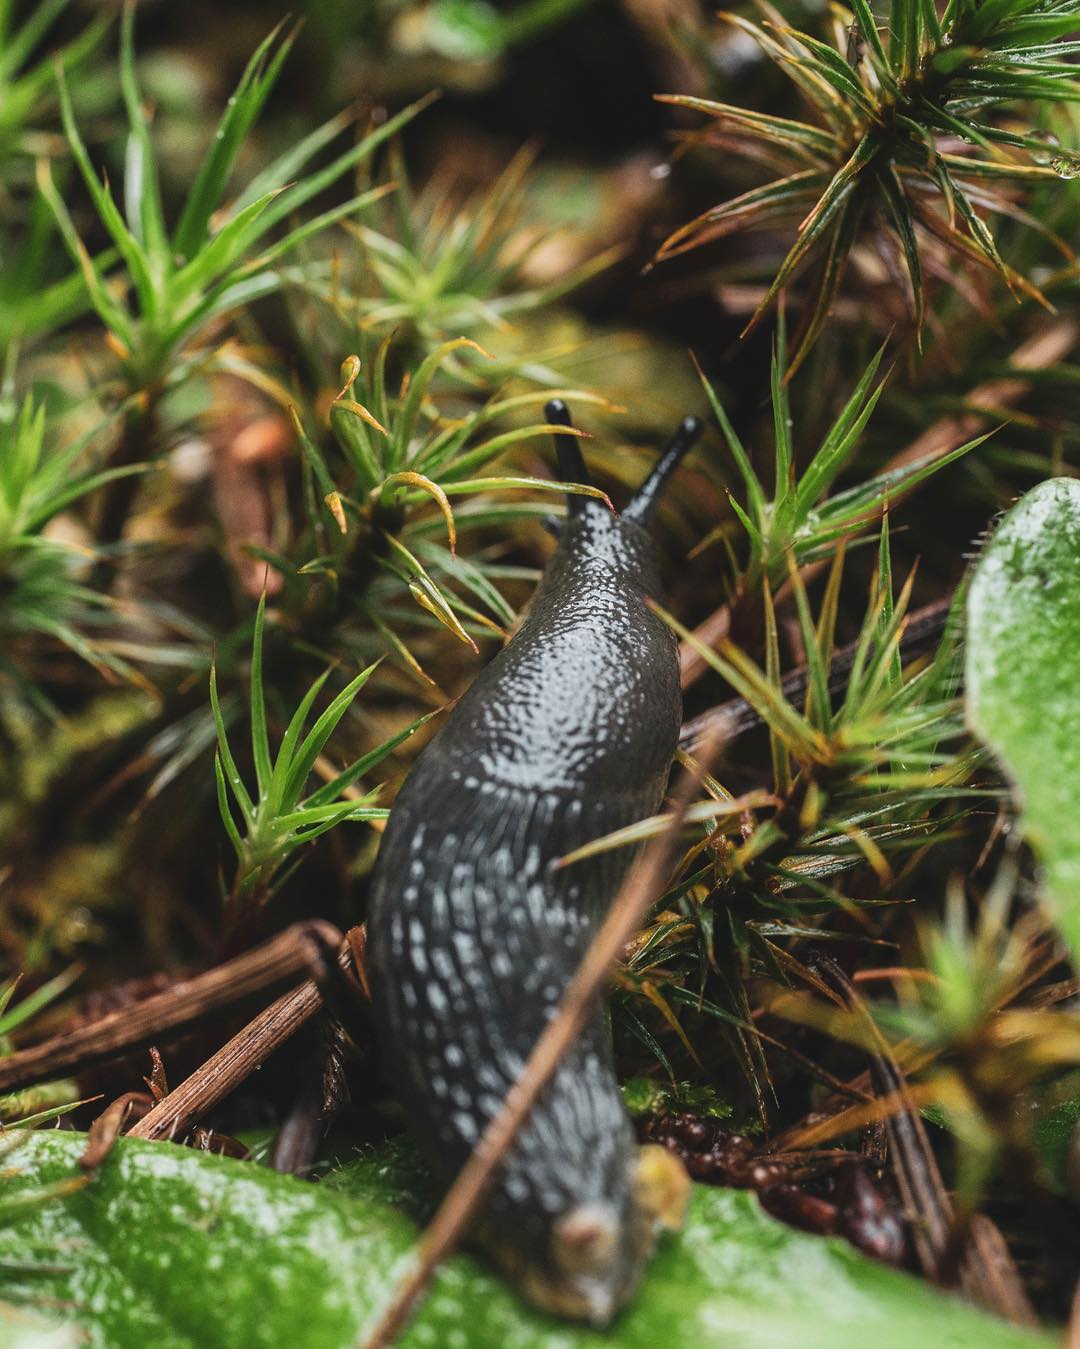 Invasive garden slug in dark grey clearly visible nestled among spiky moss